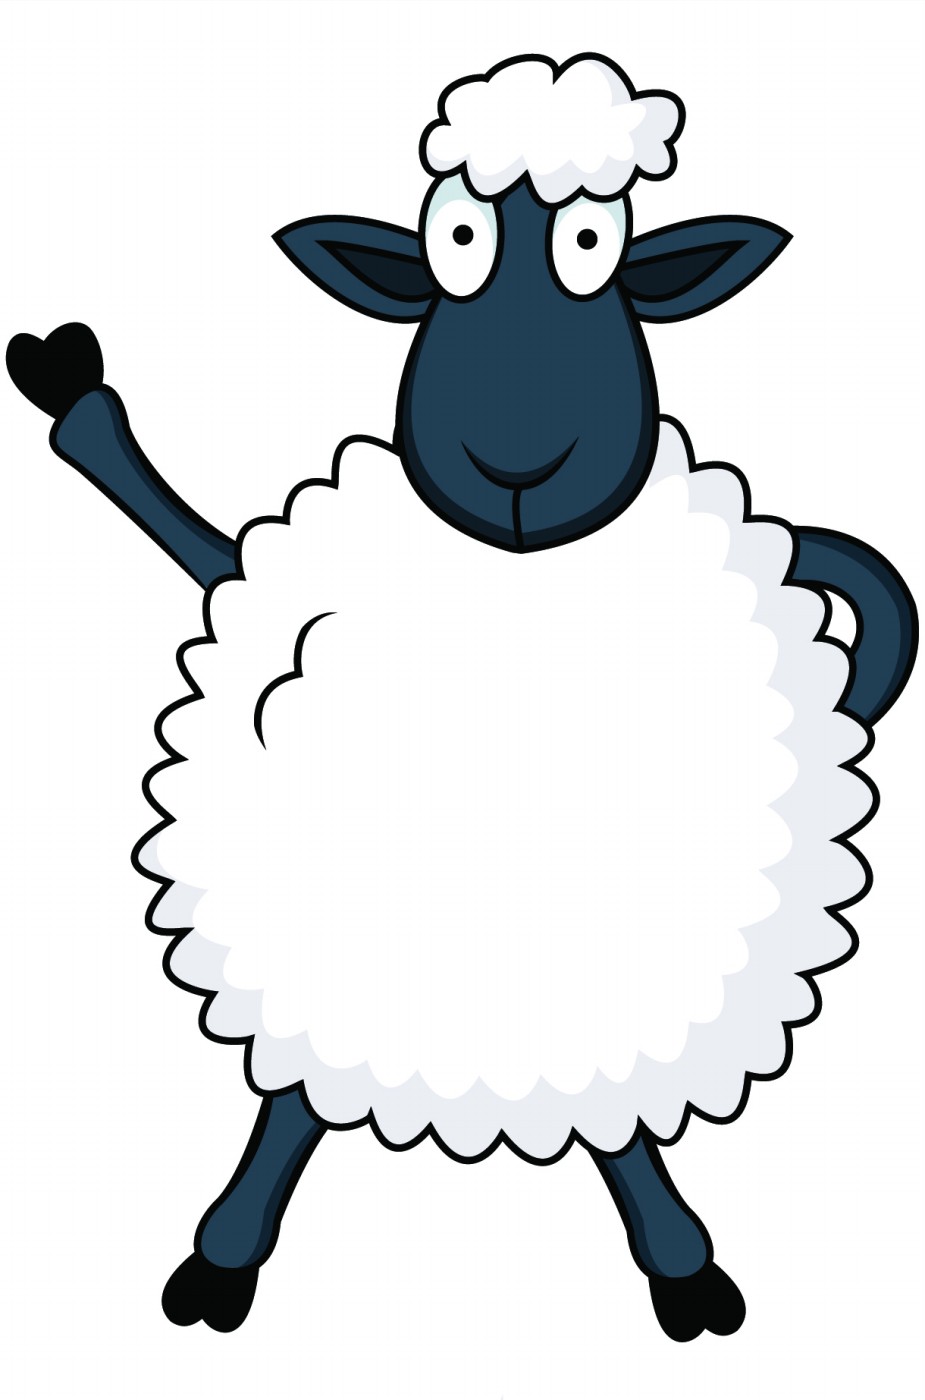 Sheep Cartoon Image Cliparts Co